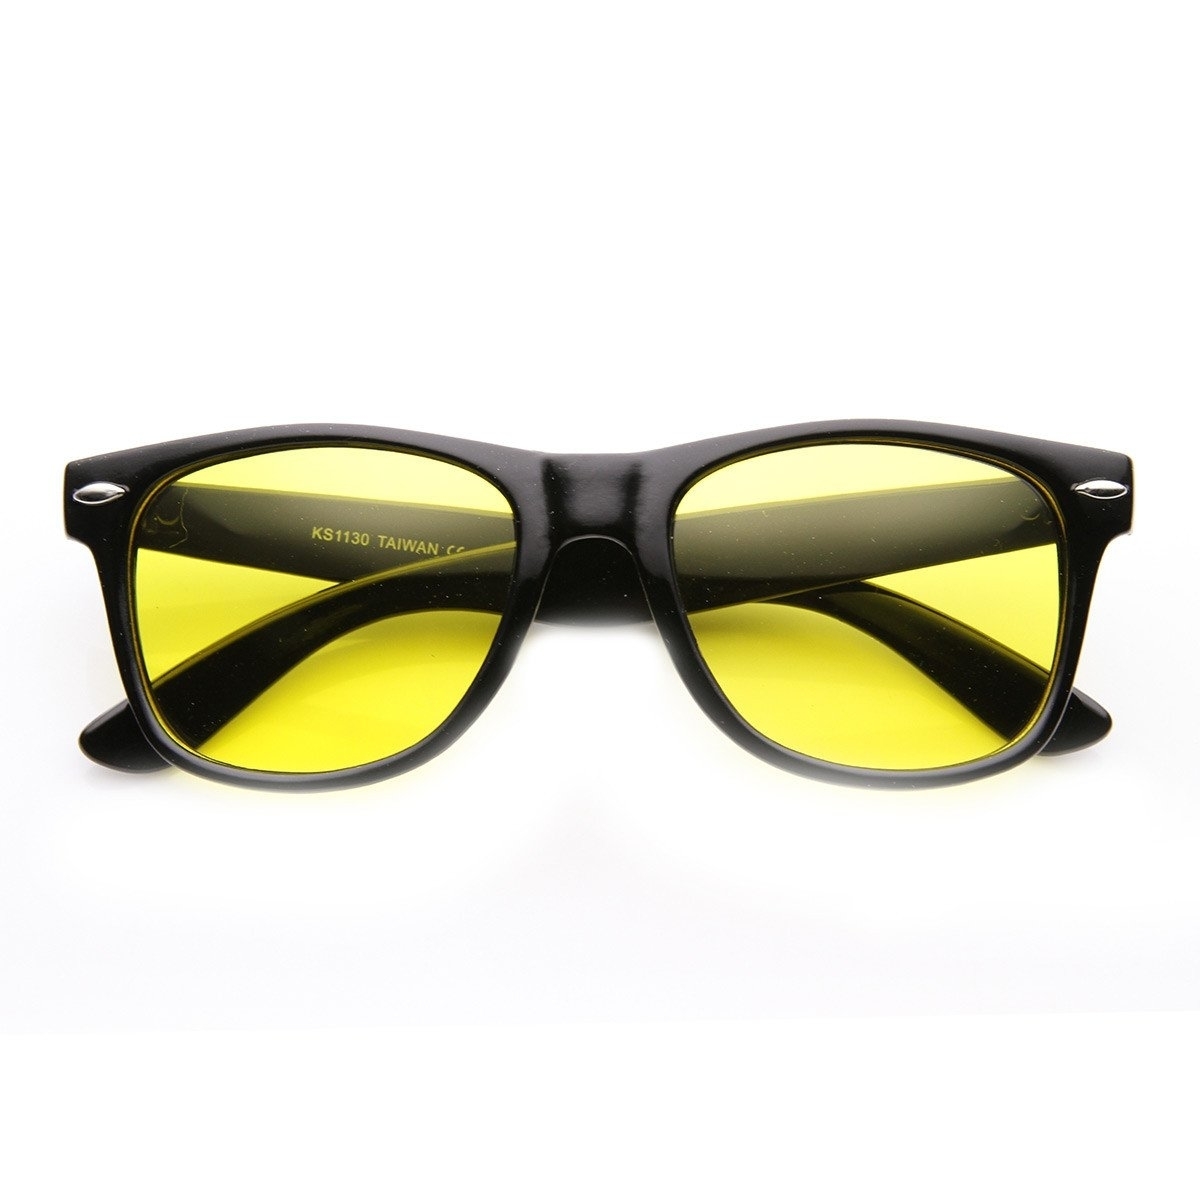 Night-Driving Glare Reducing Yellow Tinted Lens Basic Horned Rim Glasses - 2-Pack